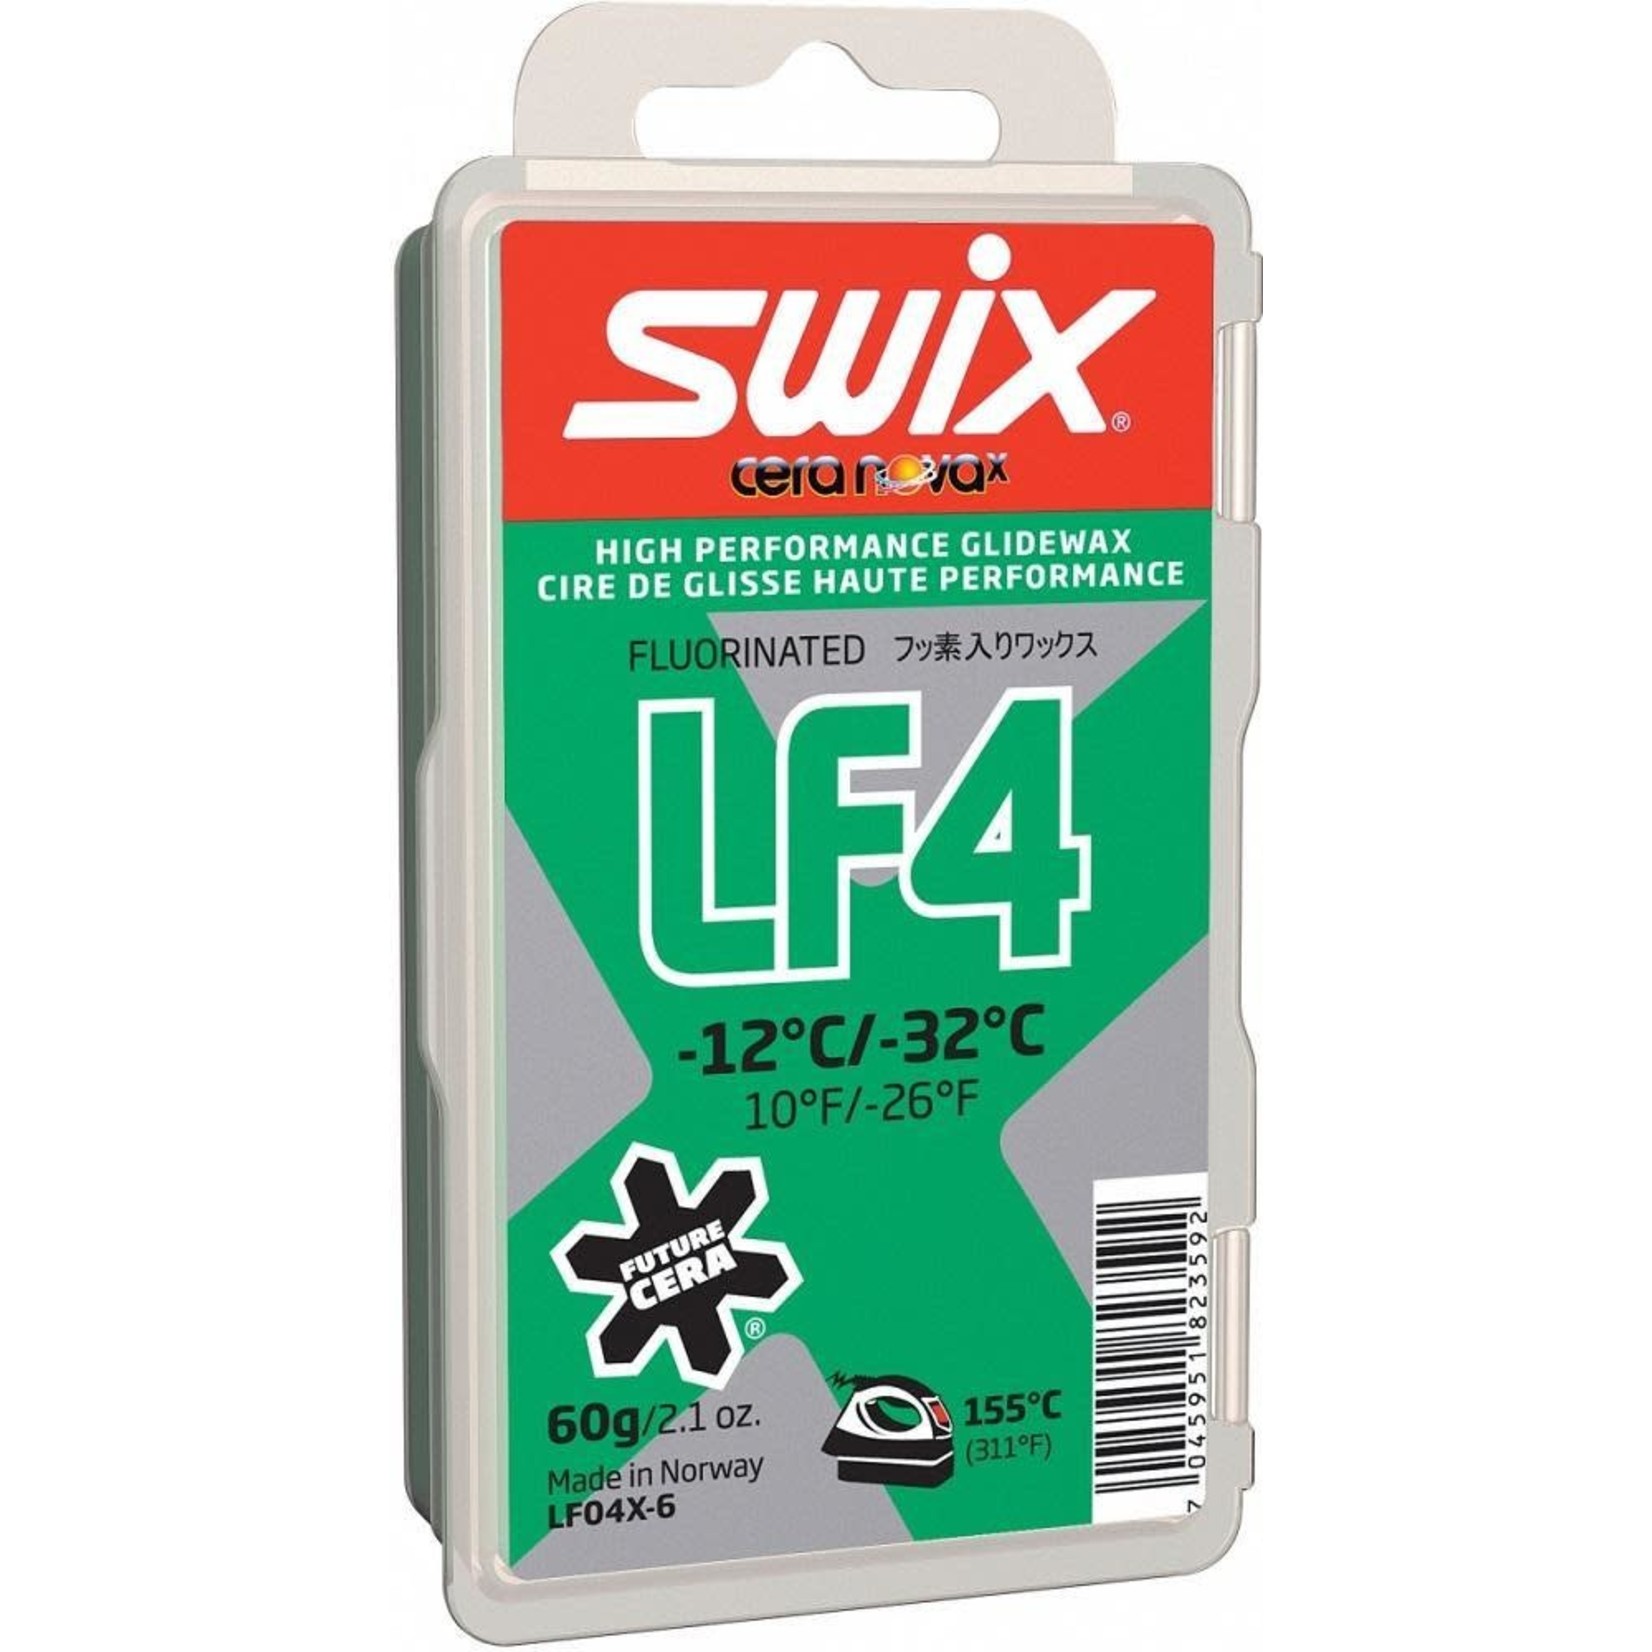 Swix LF4X GREEN, -12 C/-32 C, 60G